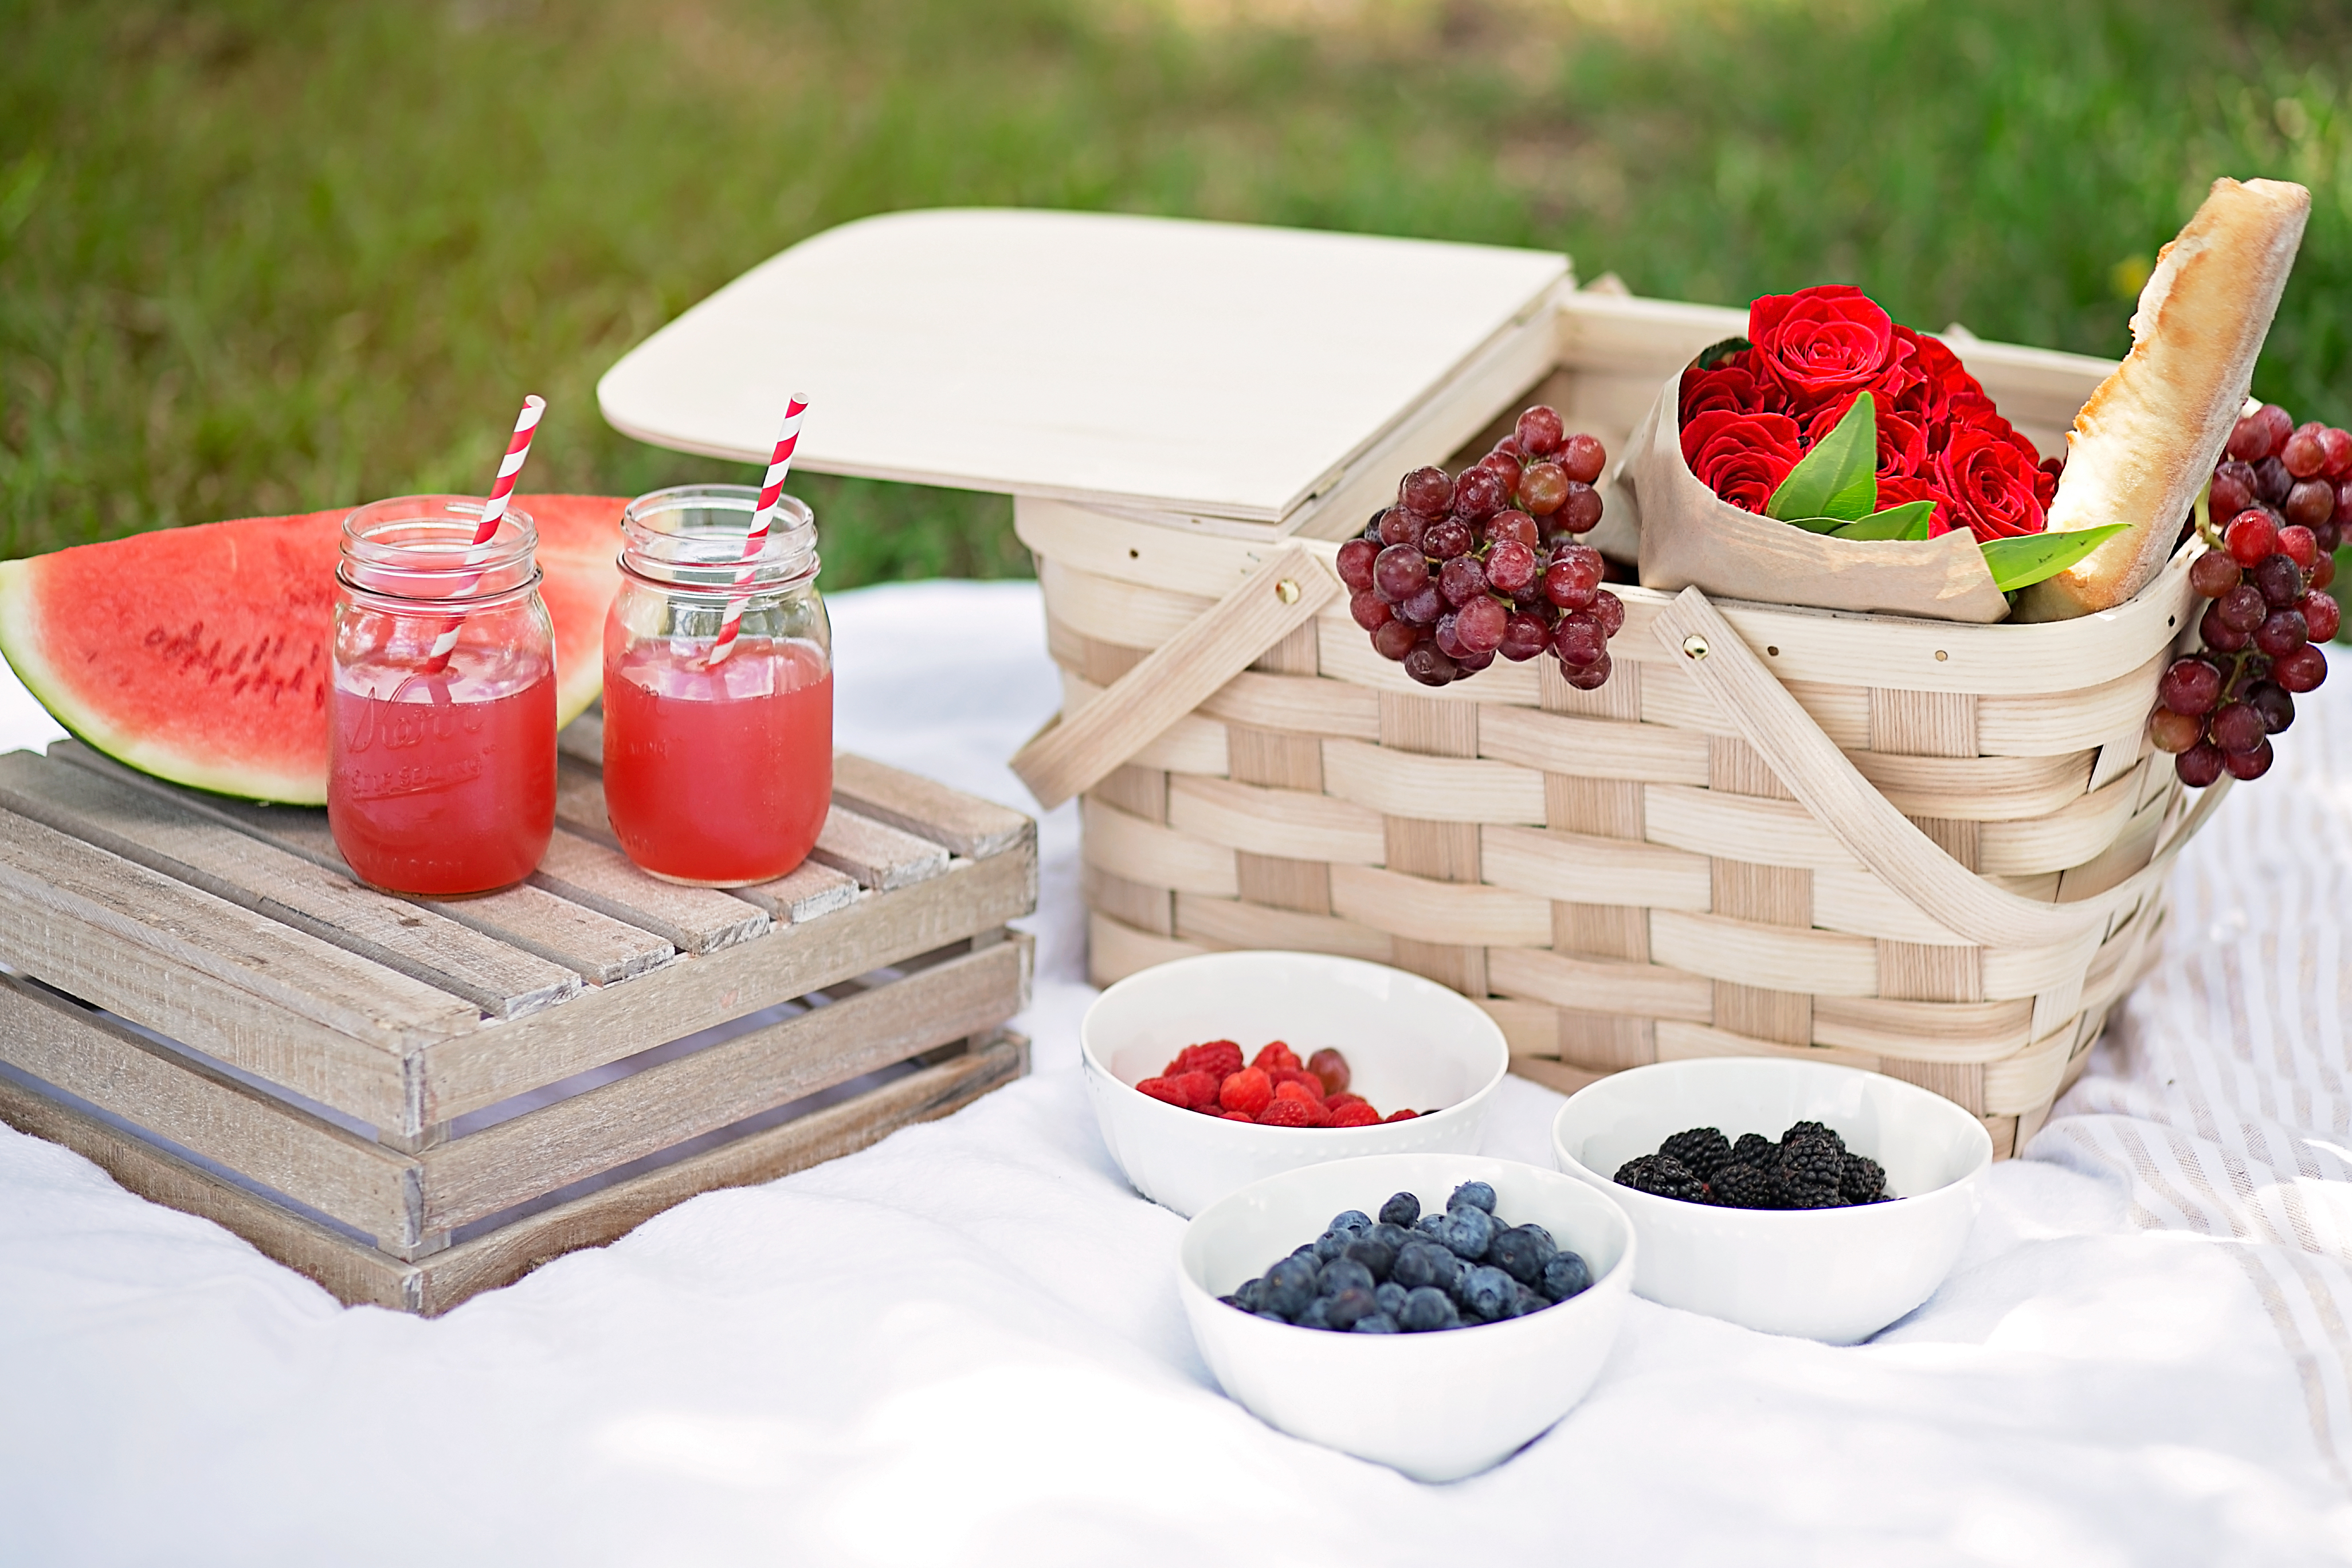 Summer picnic foods